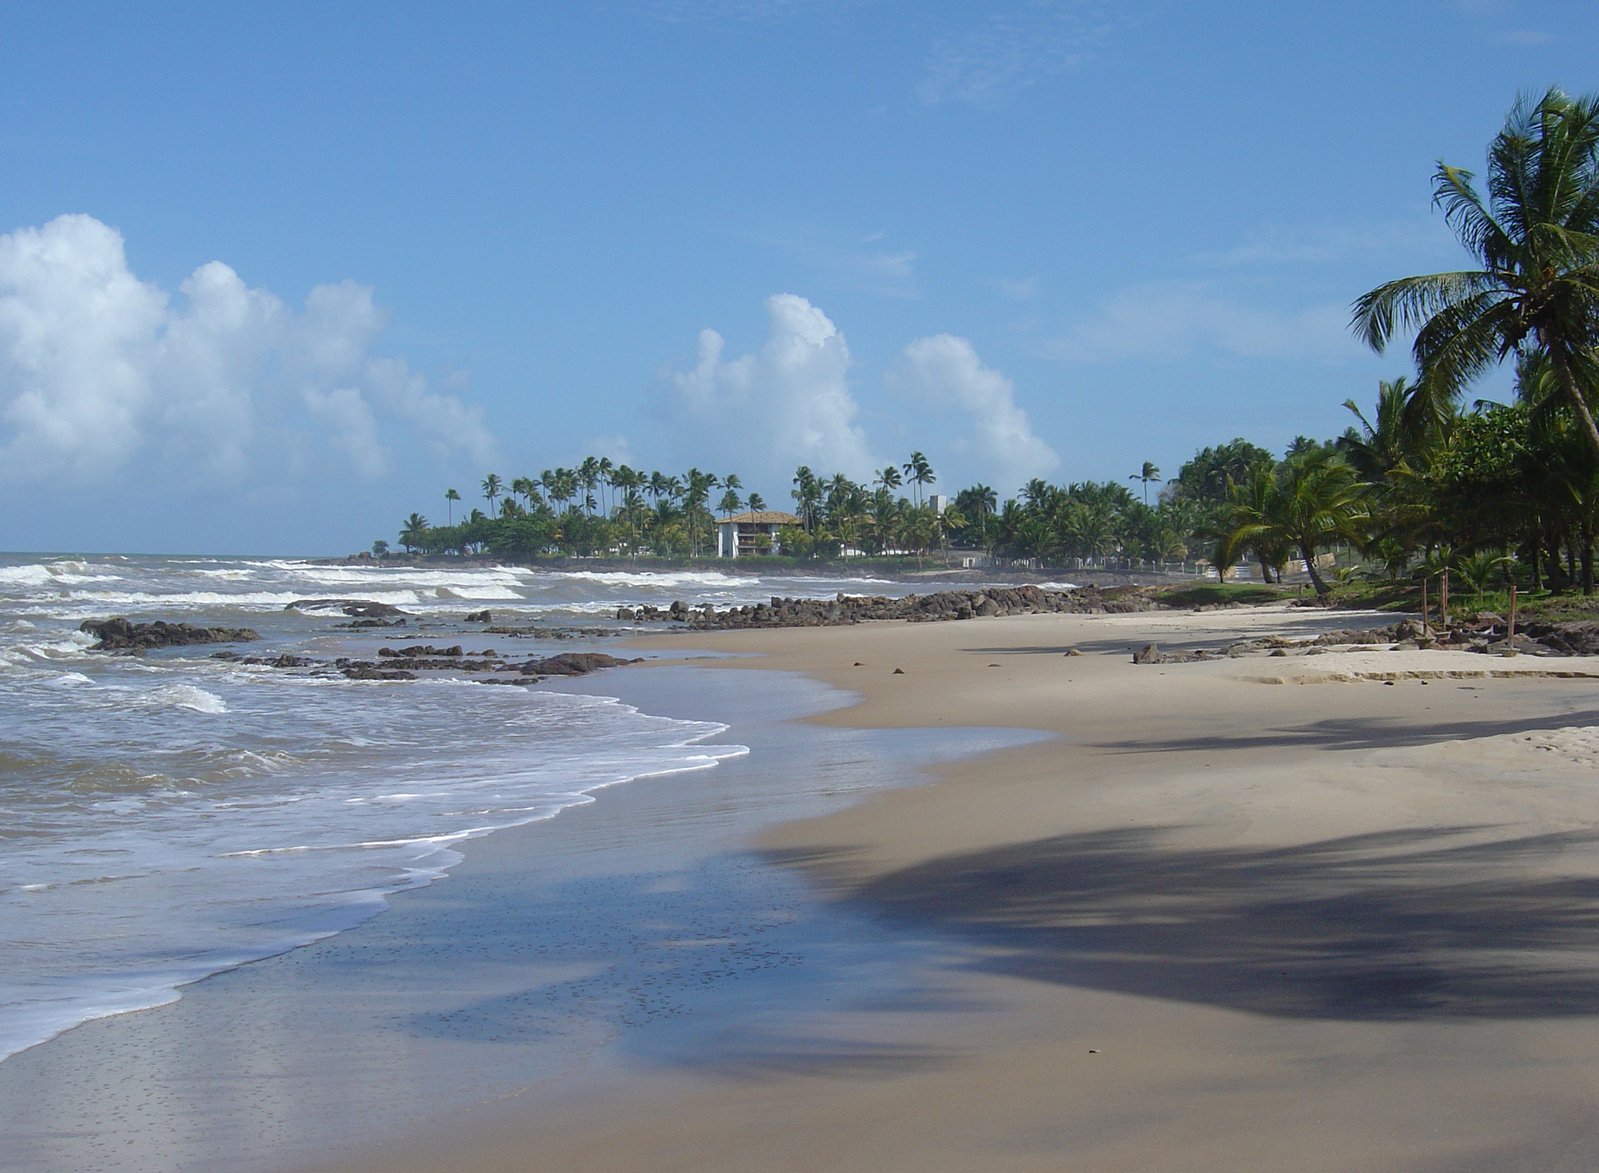 this is an ocean beach and a sandy shoreline